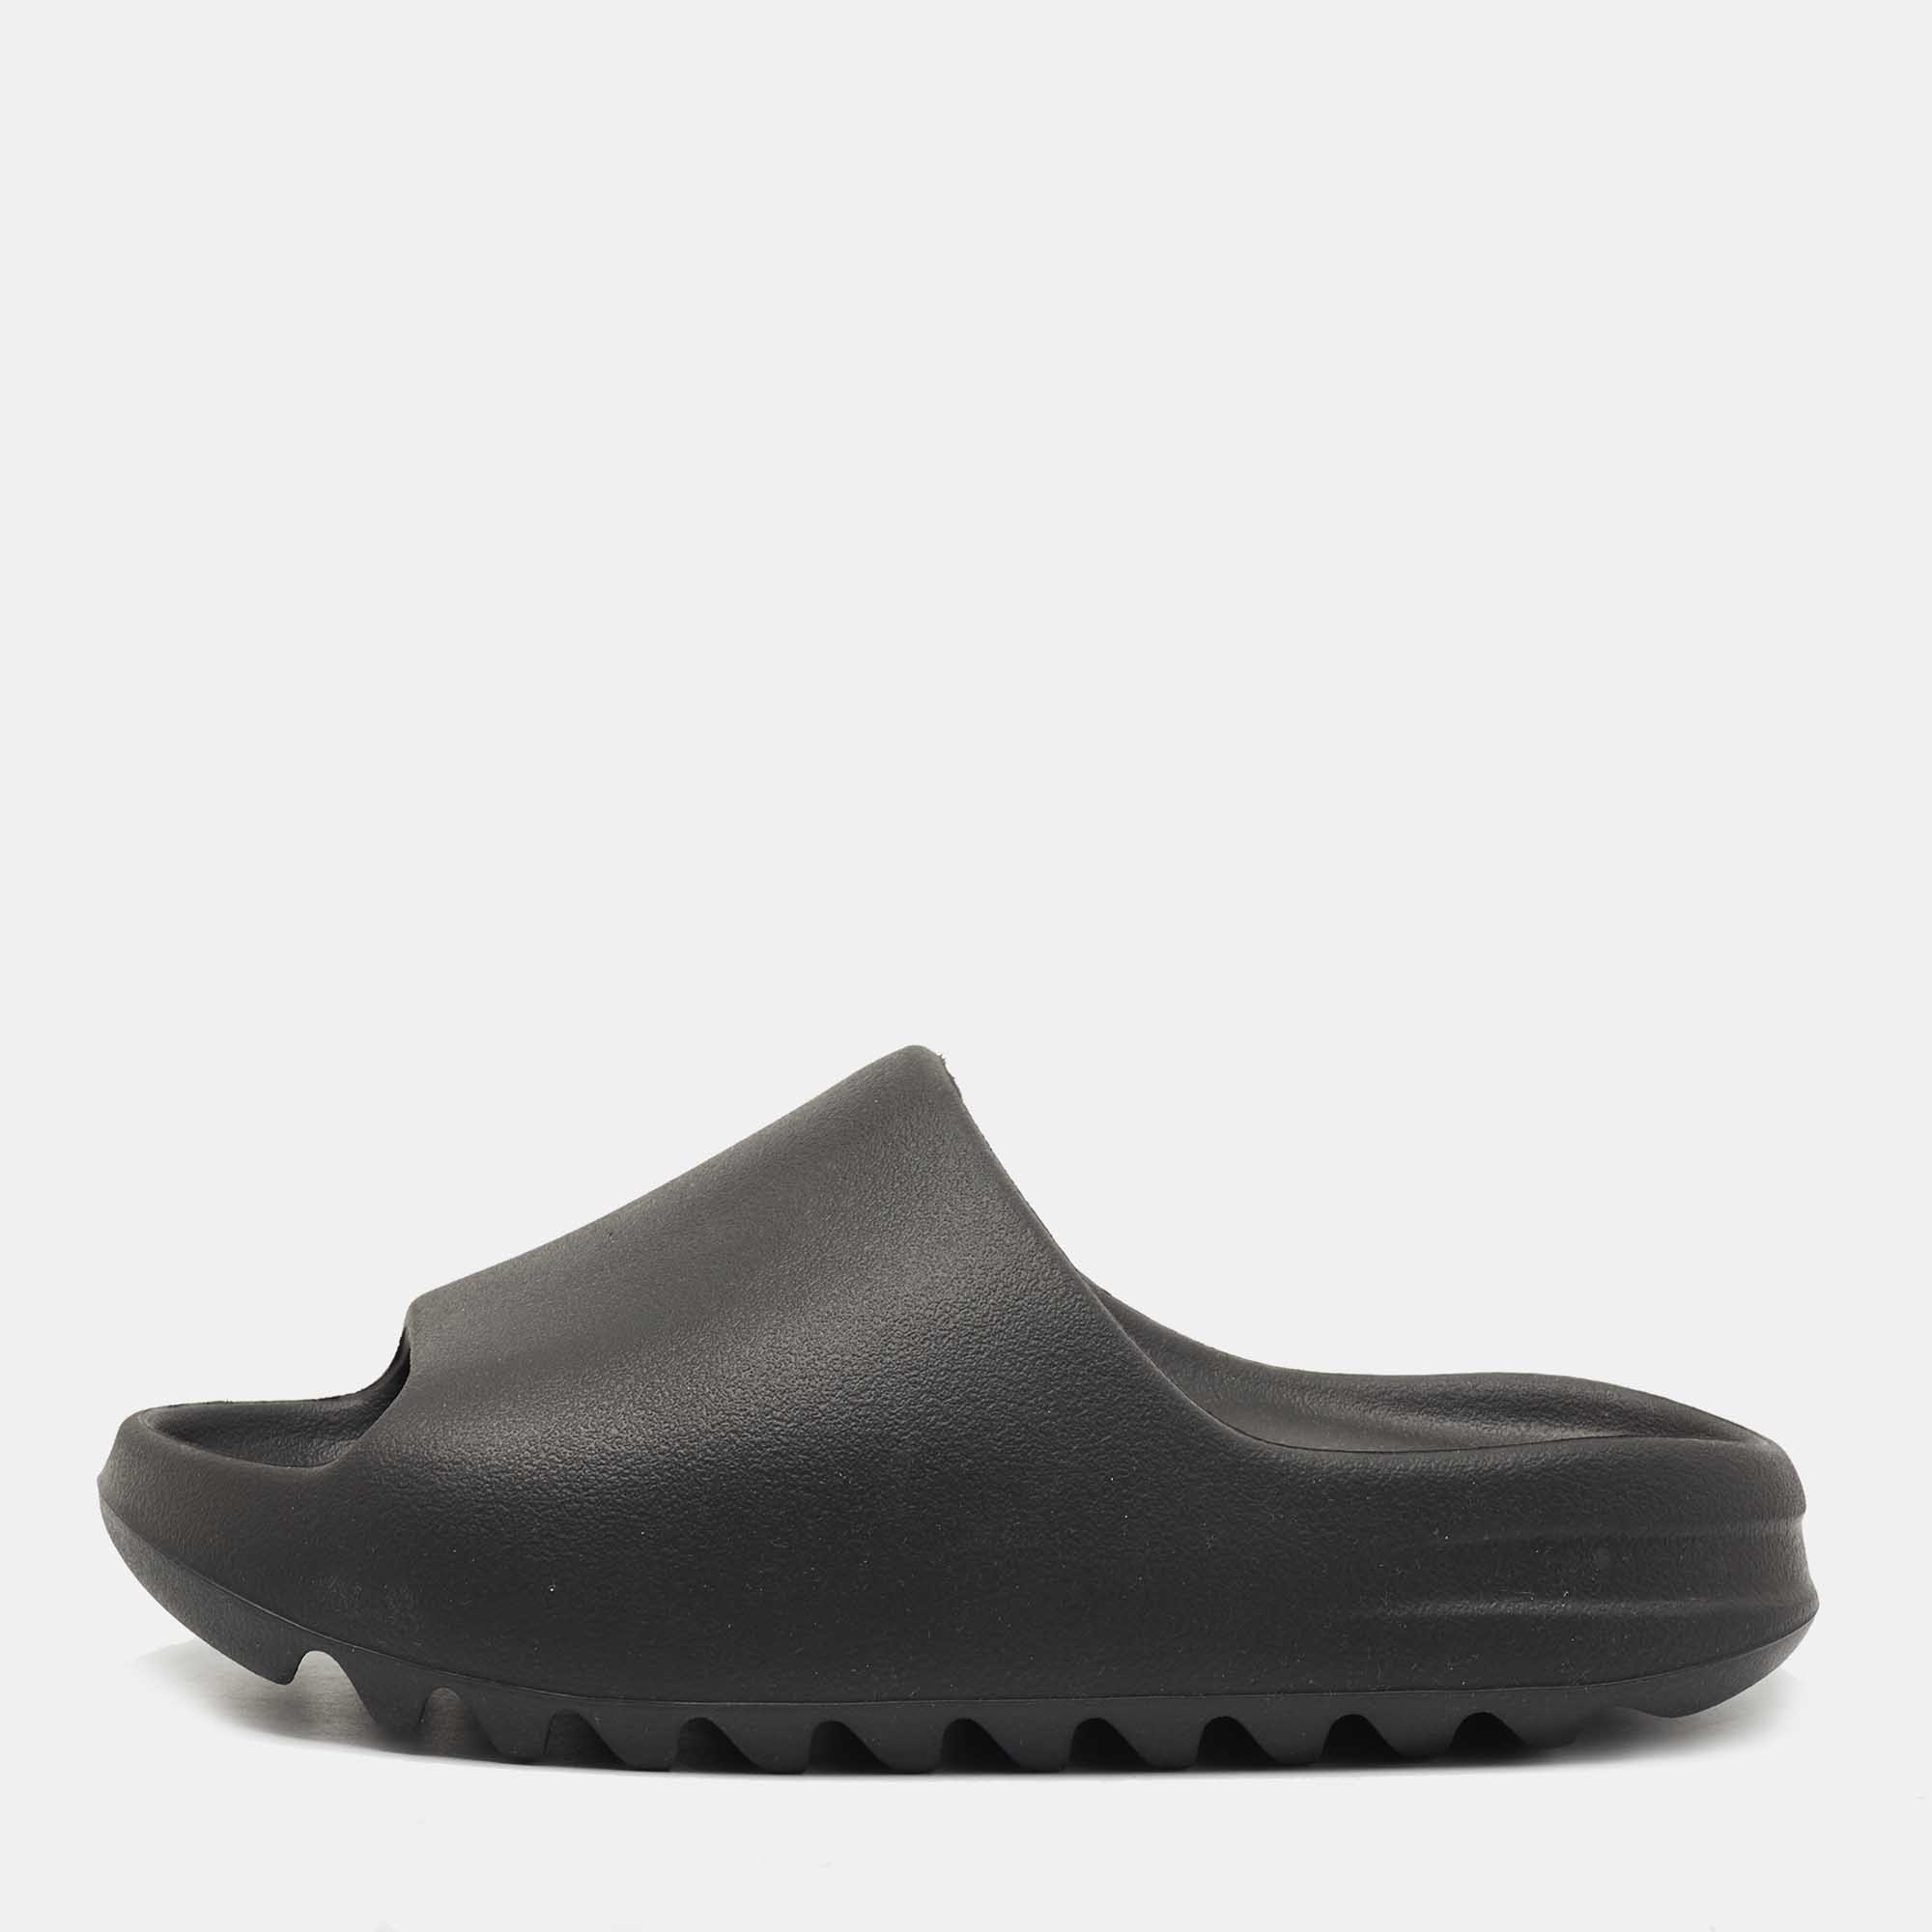 Yeezy x Adidas Black Rubber Onyx Flat Slides Size 39 Yeezy x